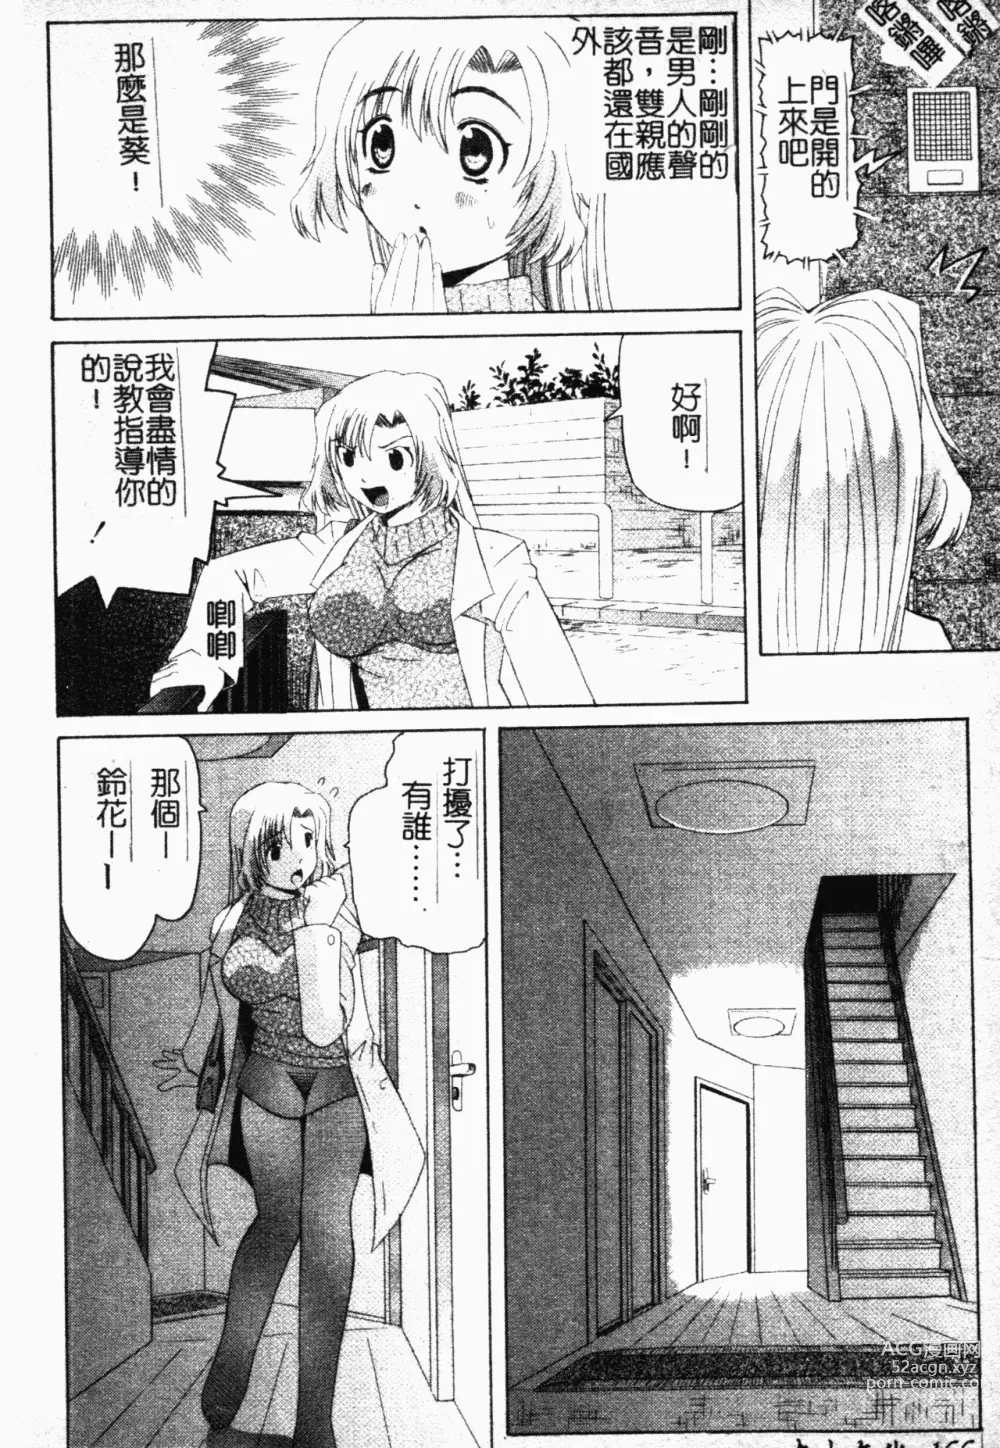 Page 166 of manga Haha Mamire